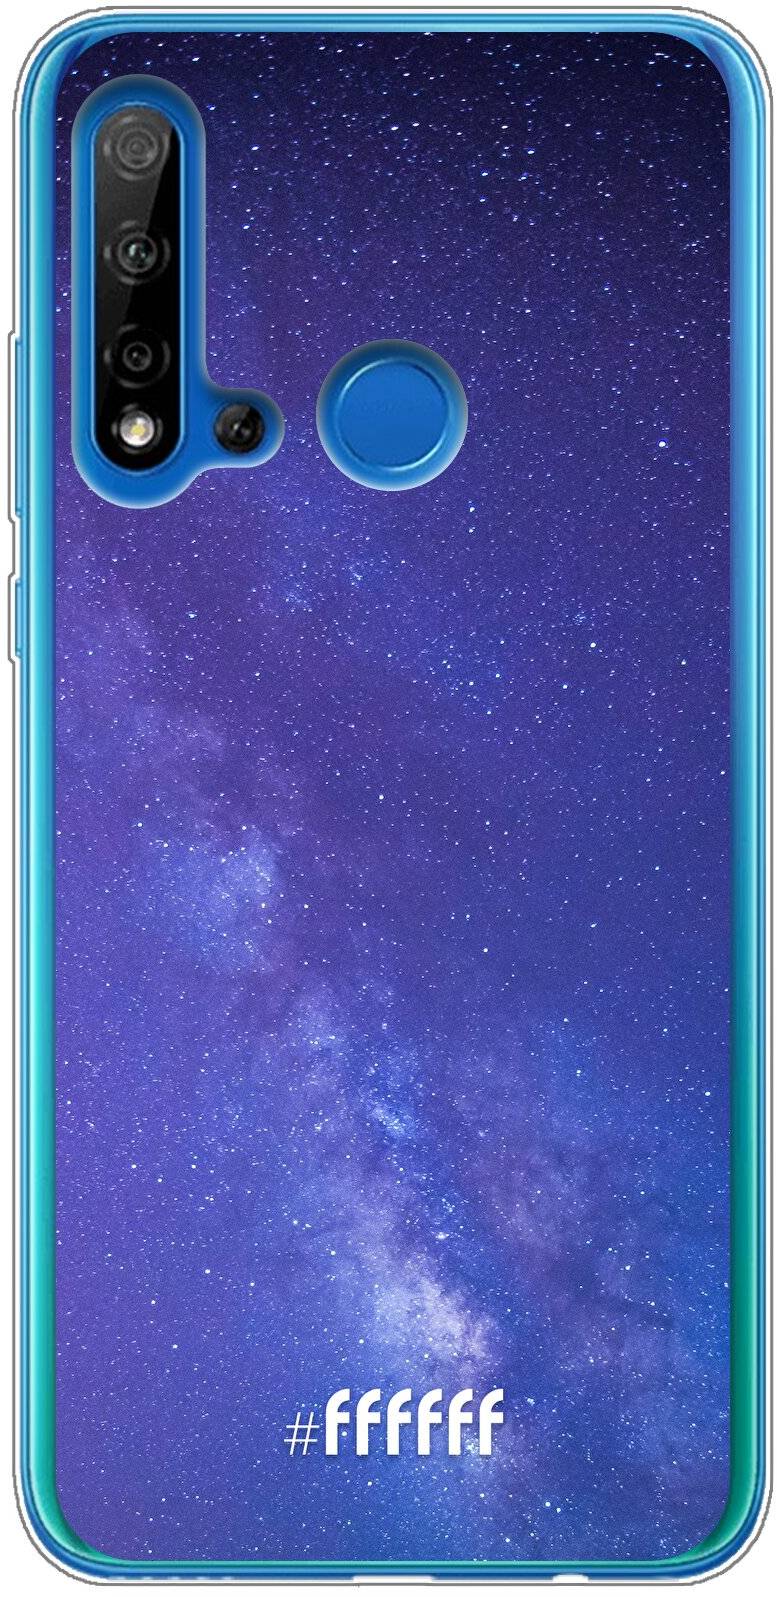 Star Cluster P20 Lite (2019)